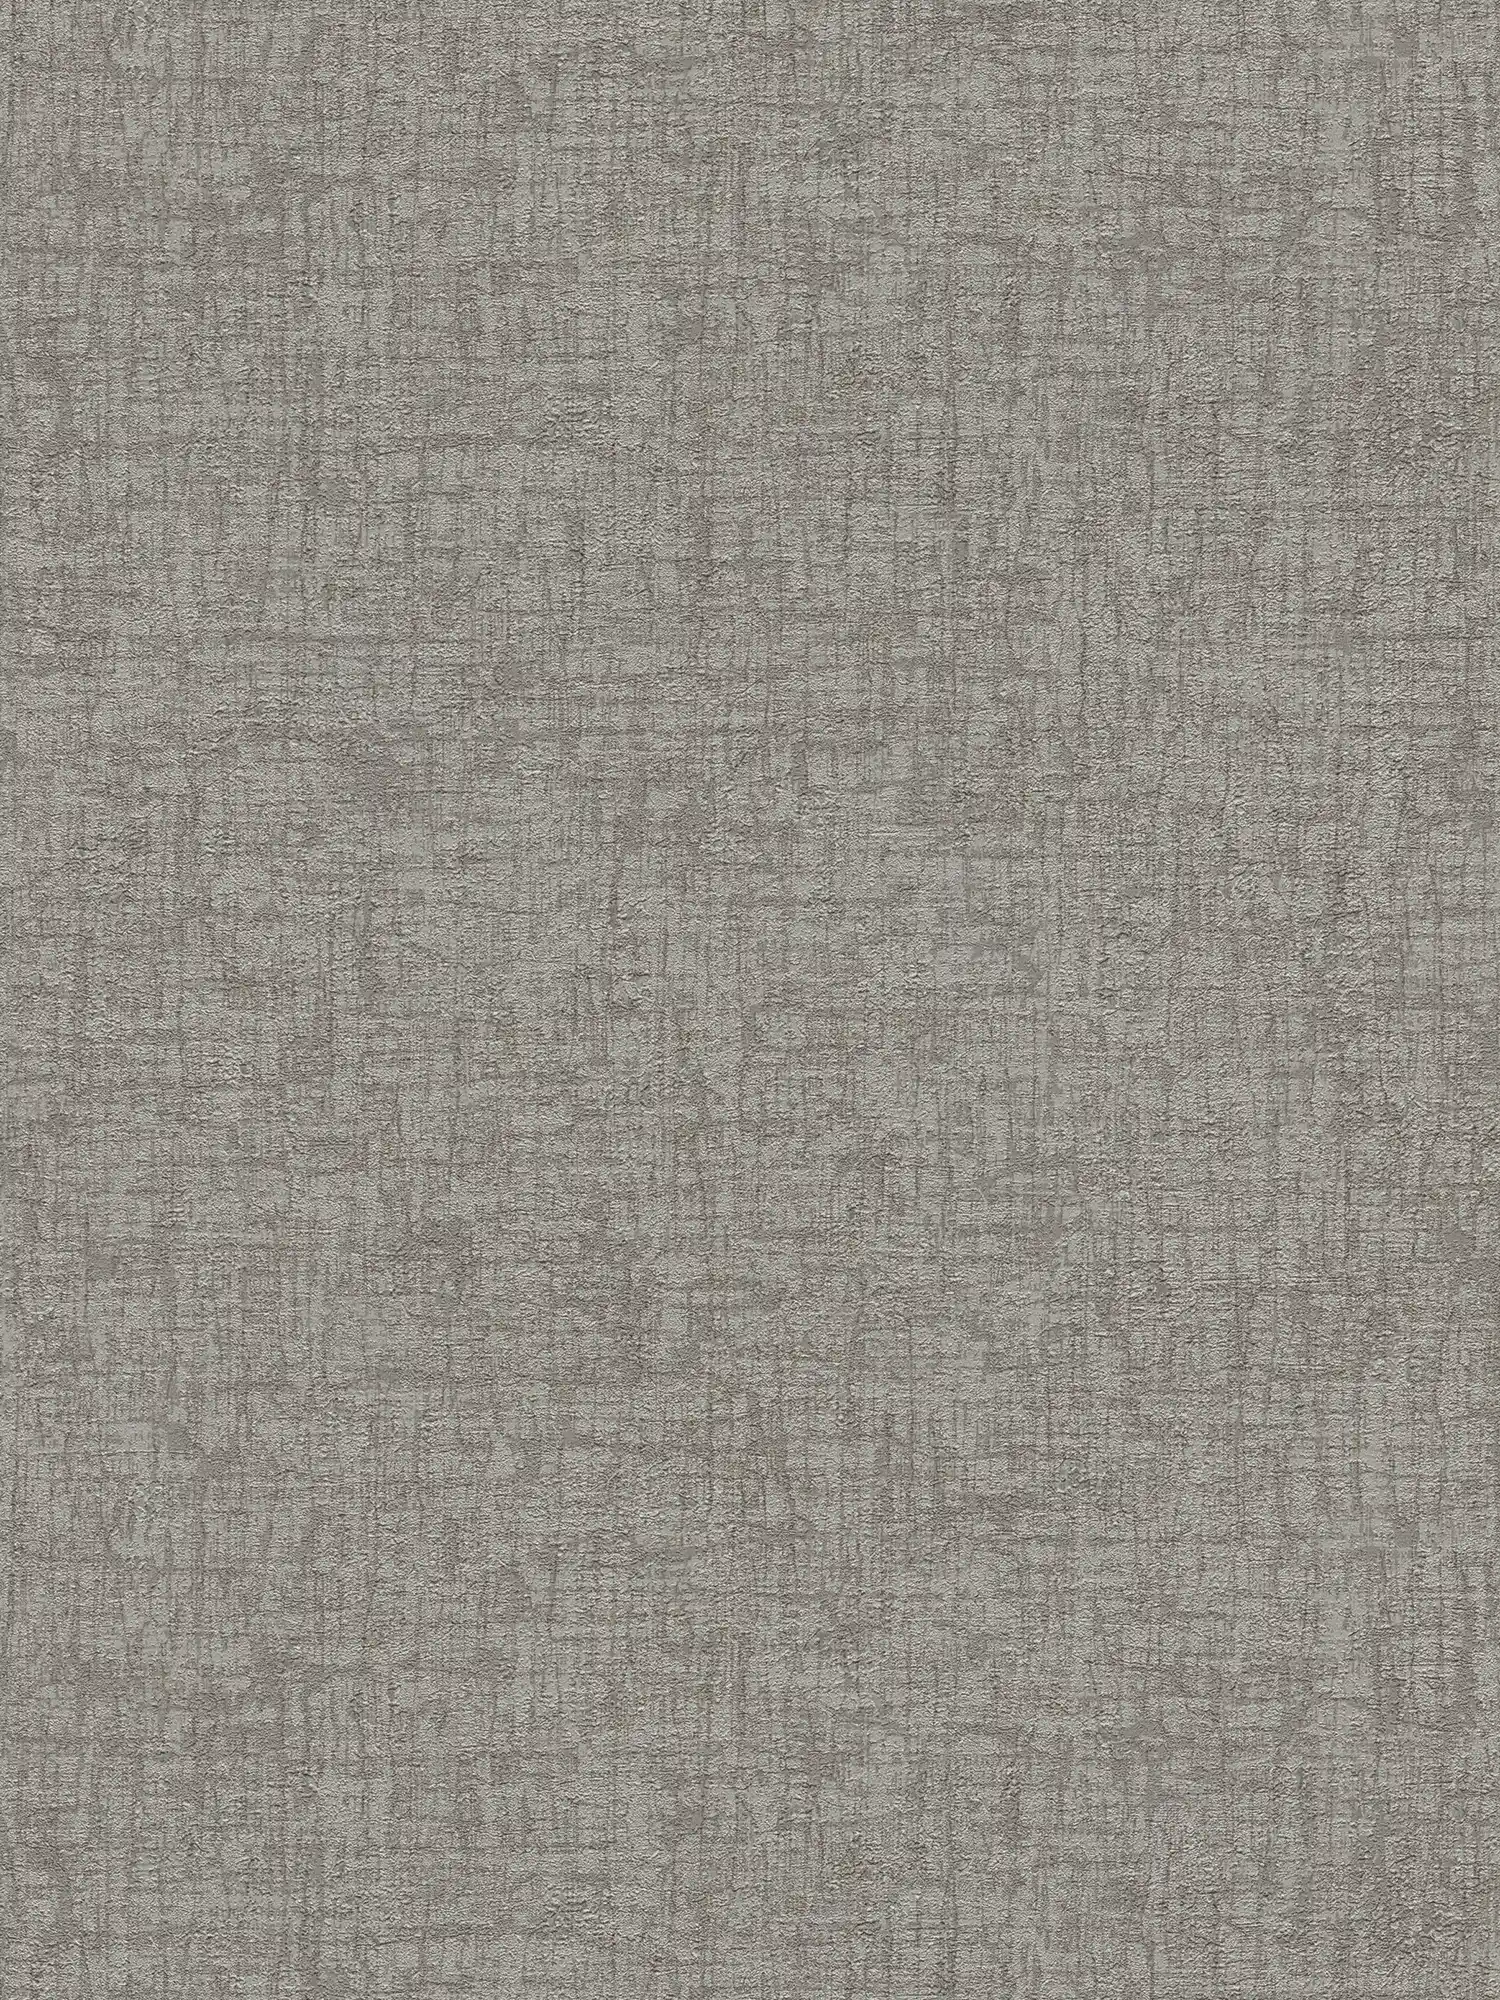 Vliestapete mit Struktur in Textiloptik – Grau, Dunkelgrau
